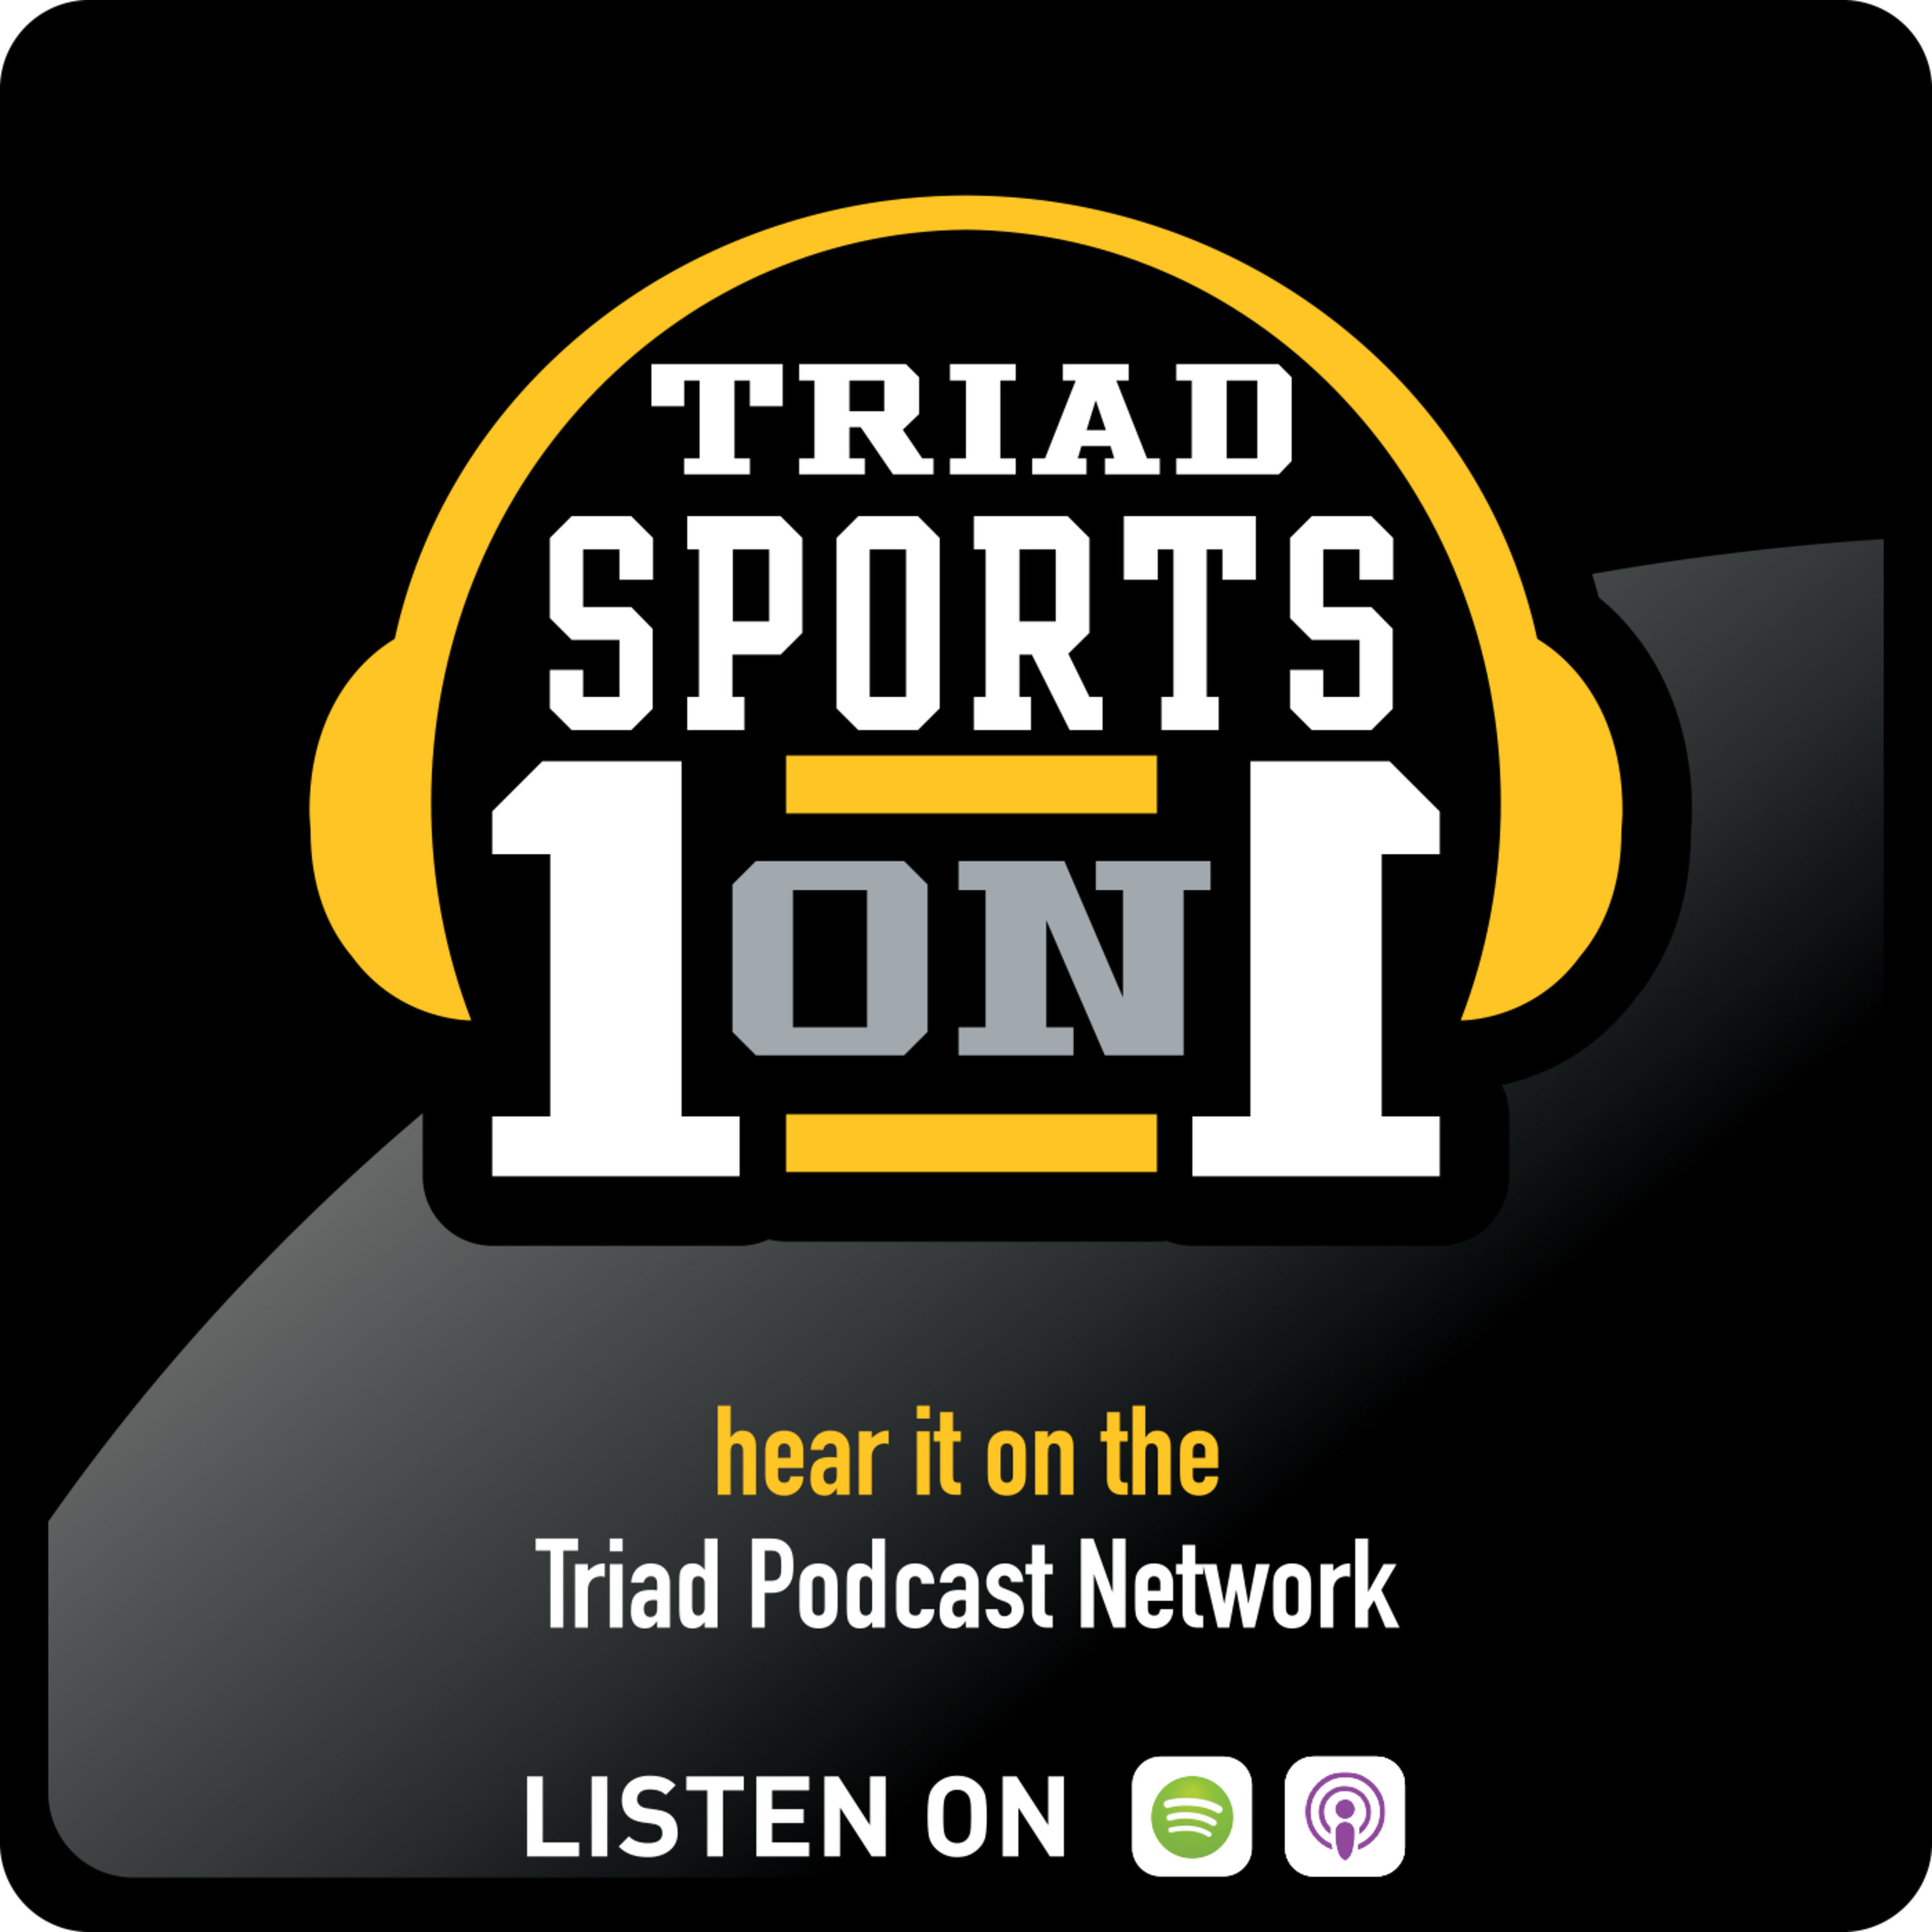 Triad Sports 1on1 - Wyndham Championship Tournament Director Mark Brazil